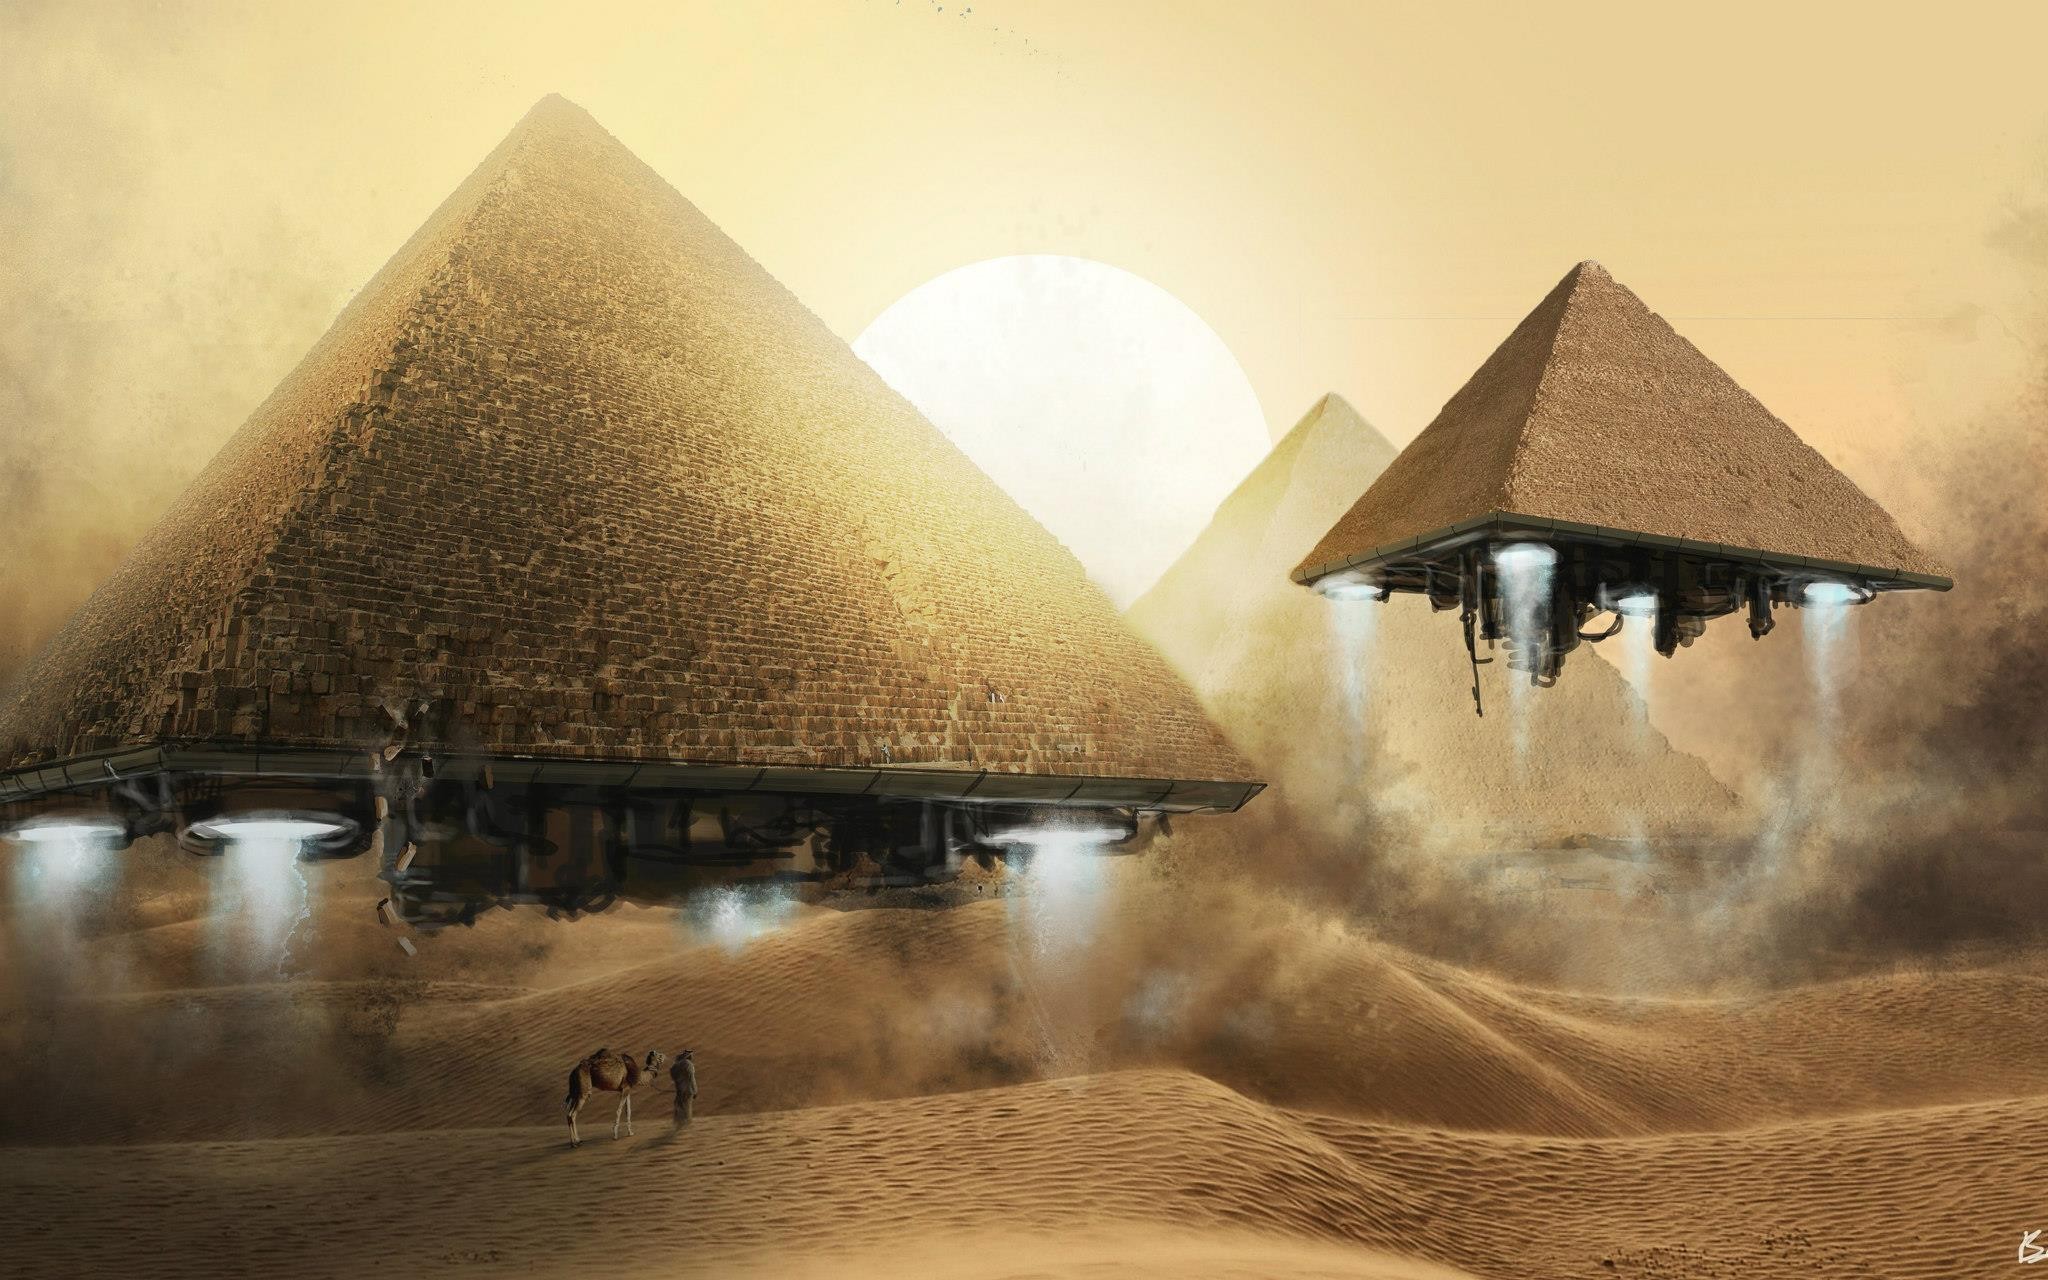 General 2048x1280 Egypt pyramid futuristic desert dunes science fiction watermarked sand camels digital art